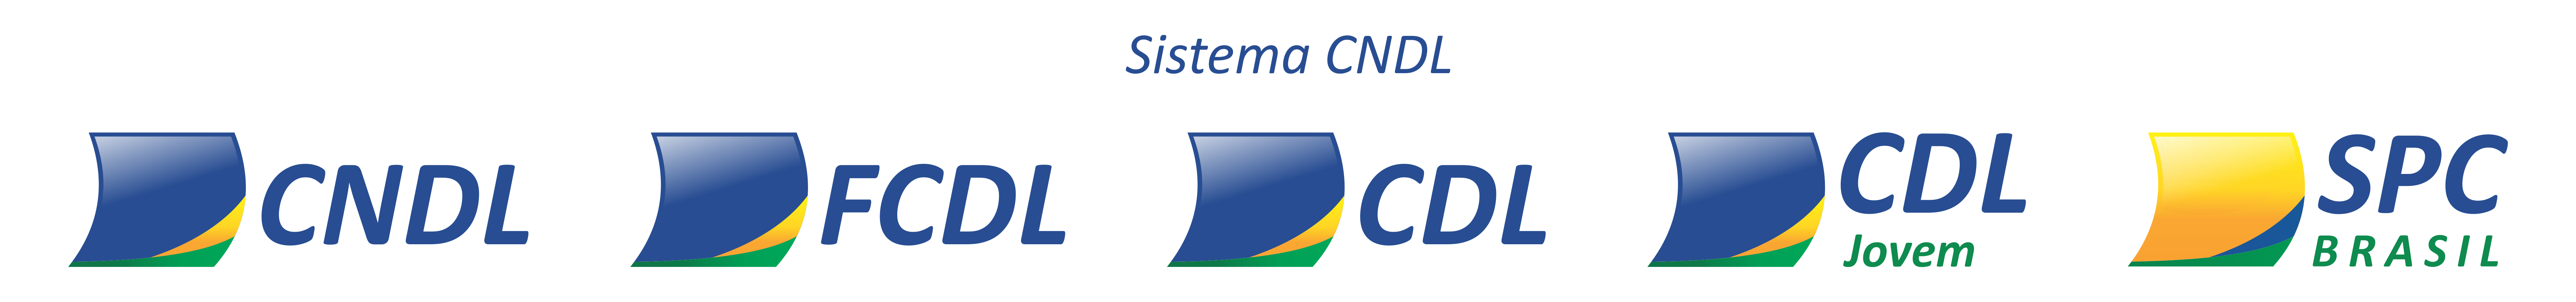 Sistema CNDL